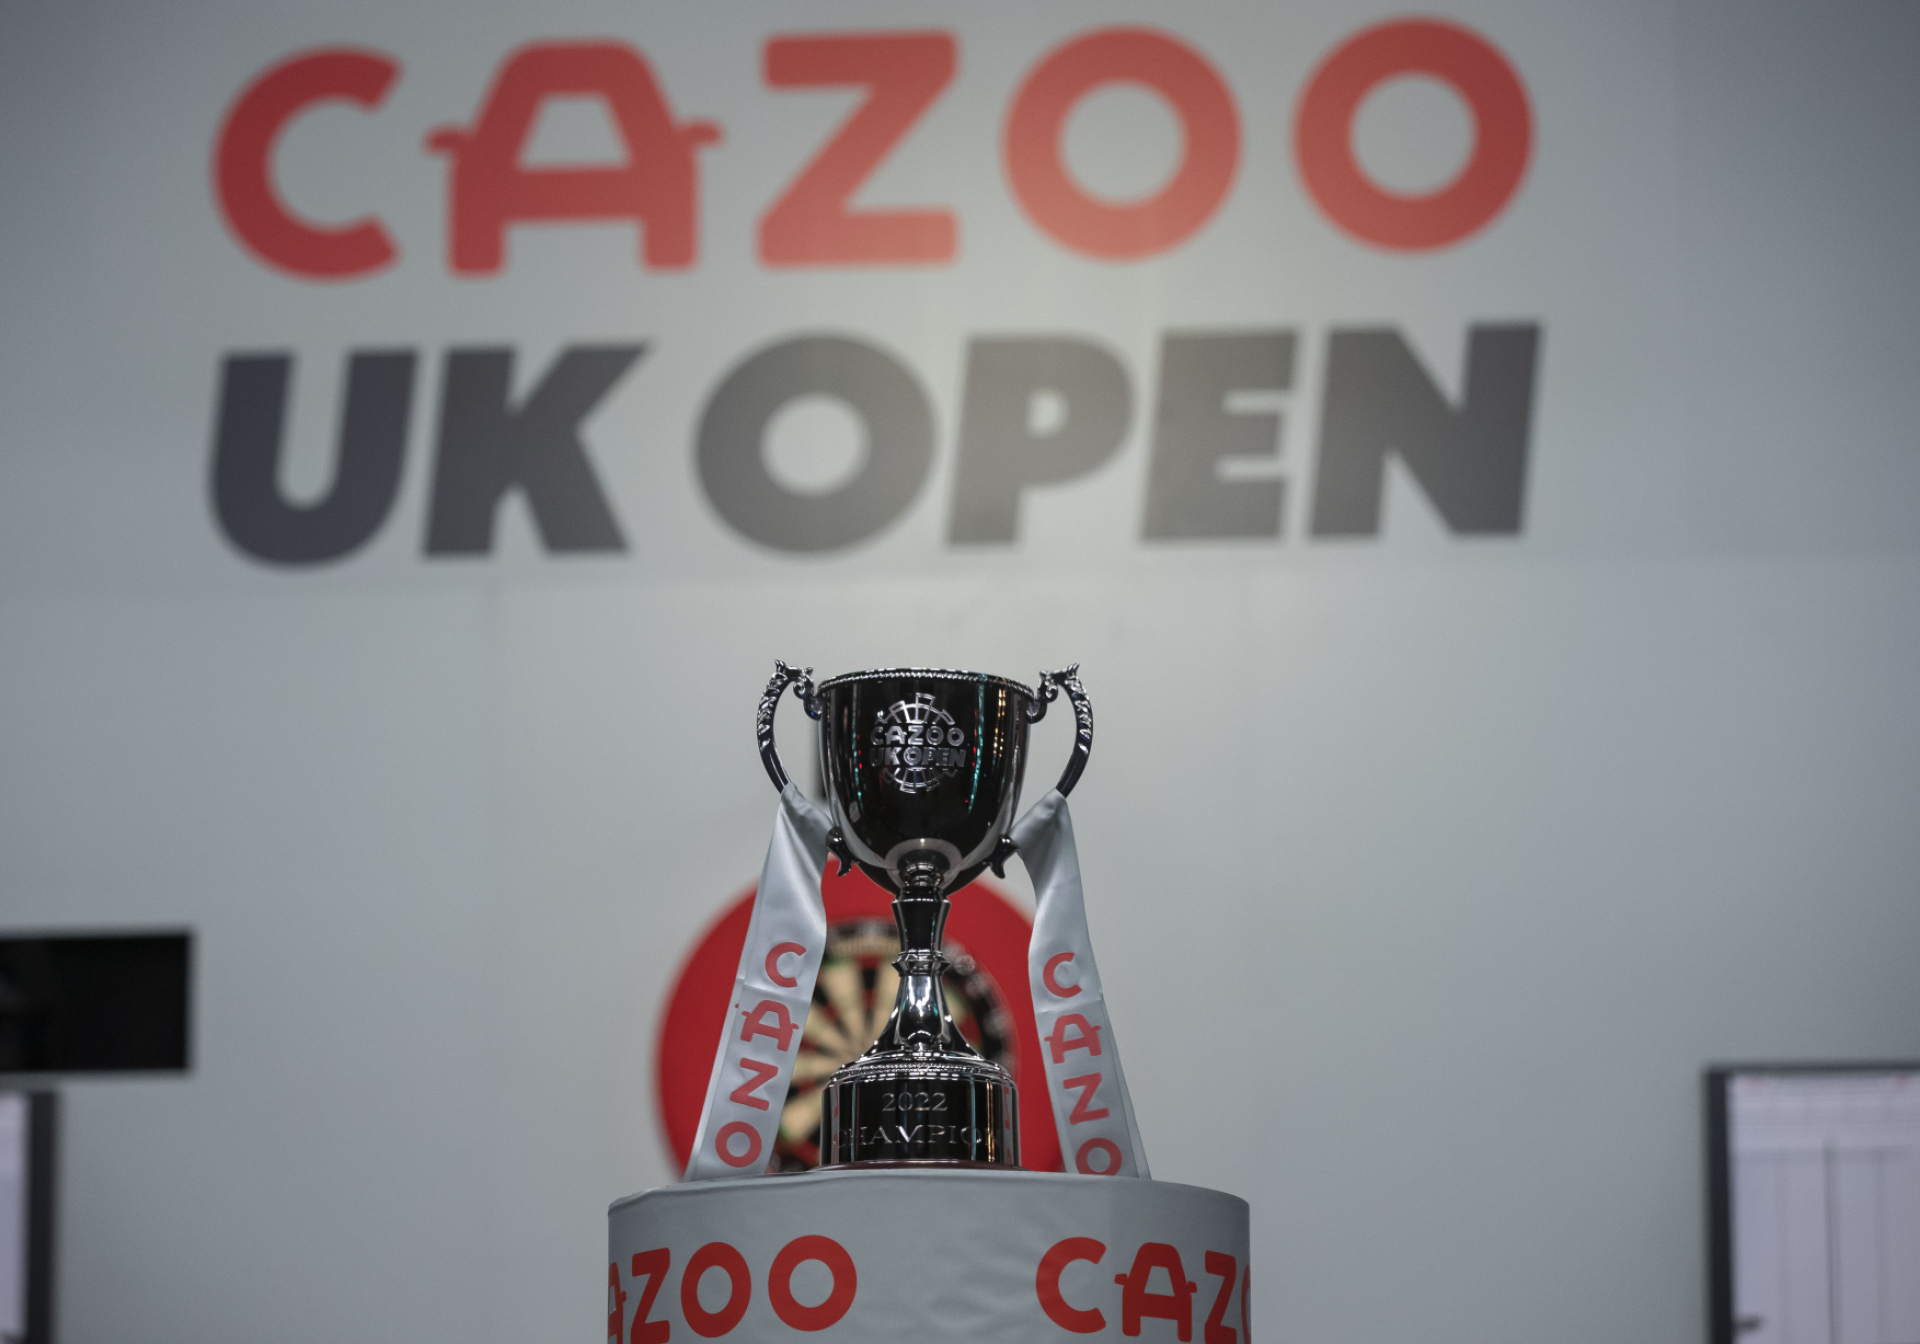 Cazoo UK Open trophy